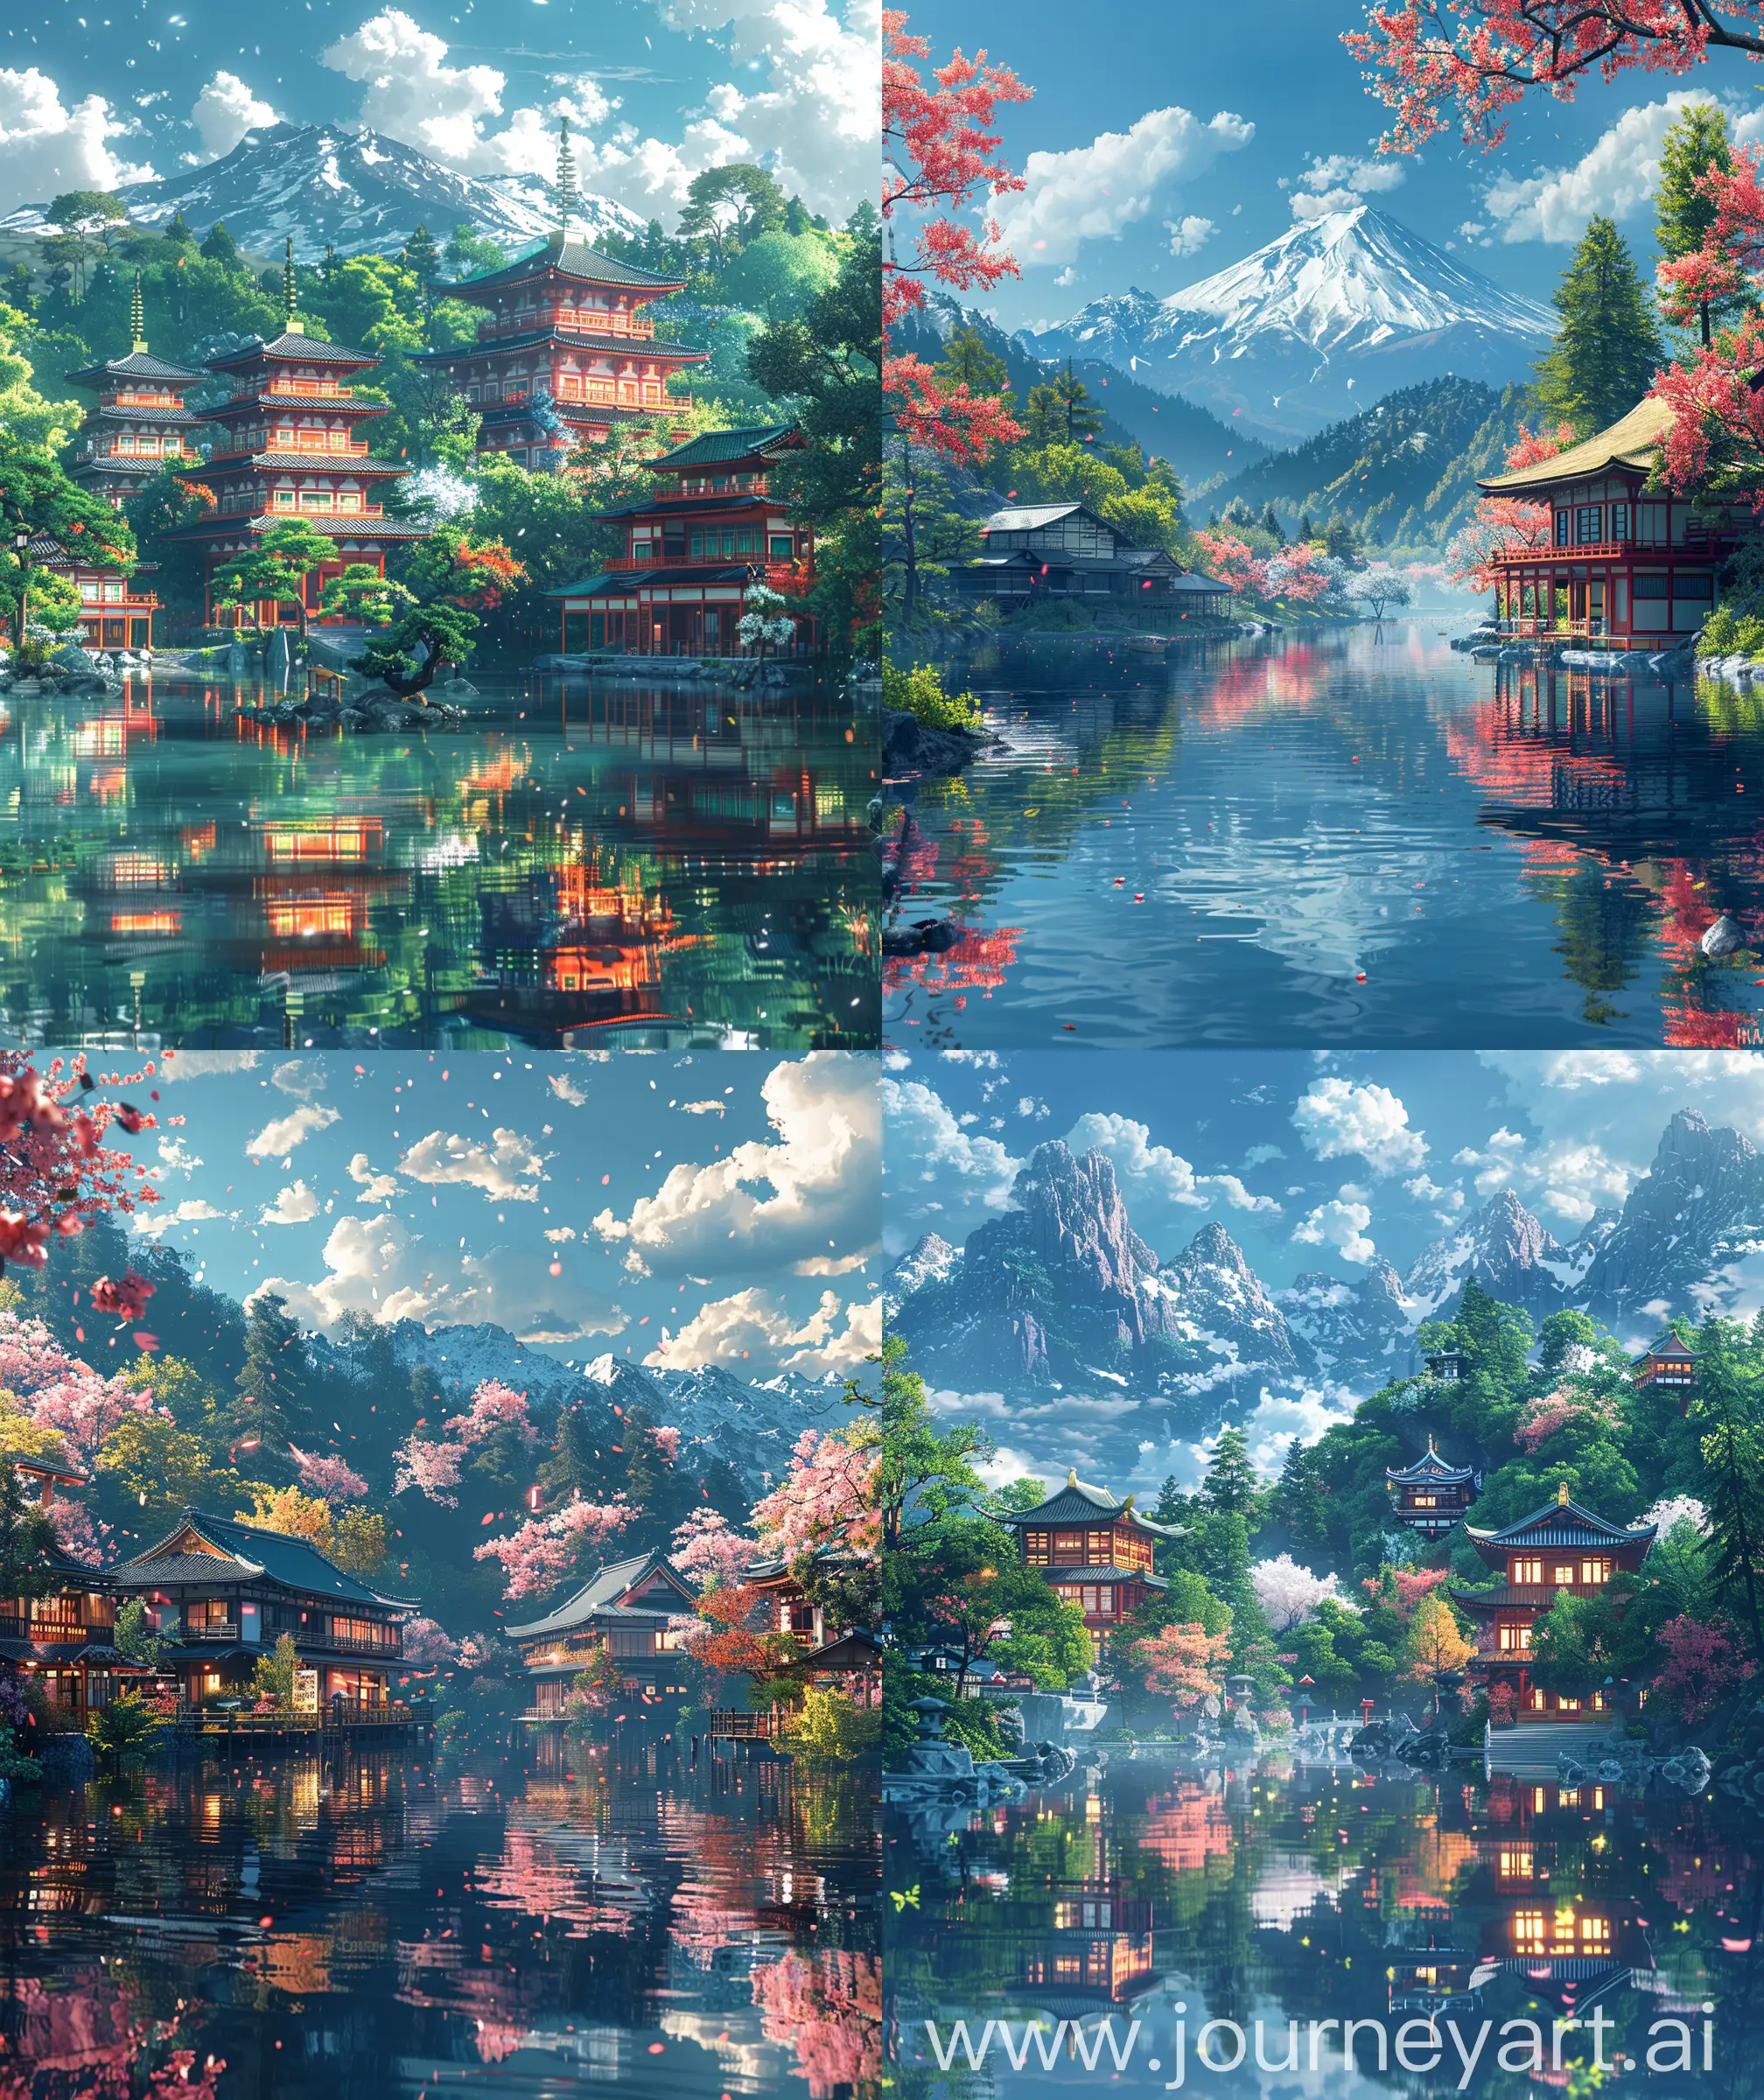 Majestic-Springtime-Serenity-Anime-Style-Earths-Nature-Scenery-Illustration